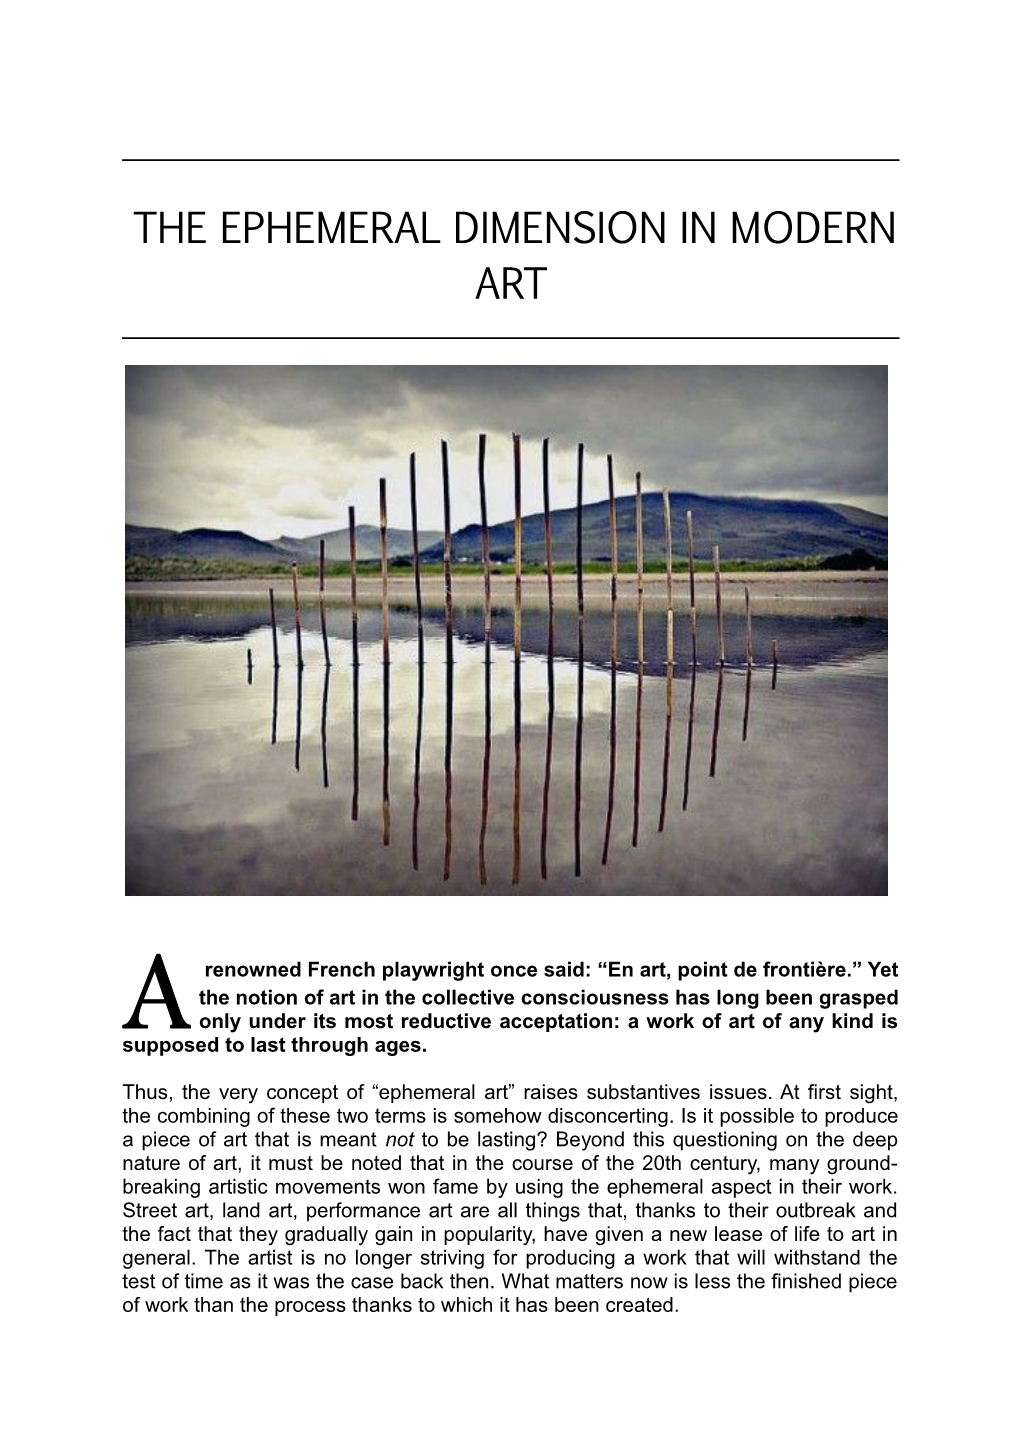 The Ephemeral Dimension in Modern Art